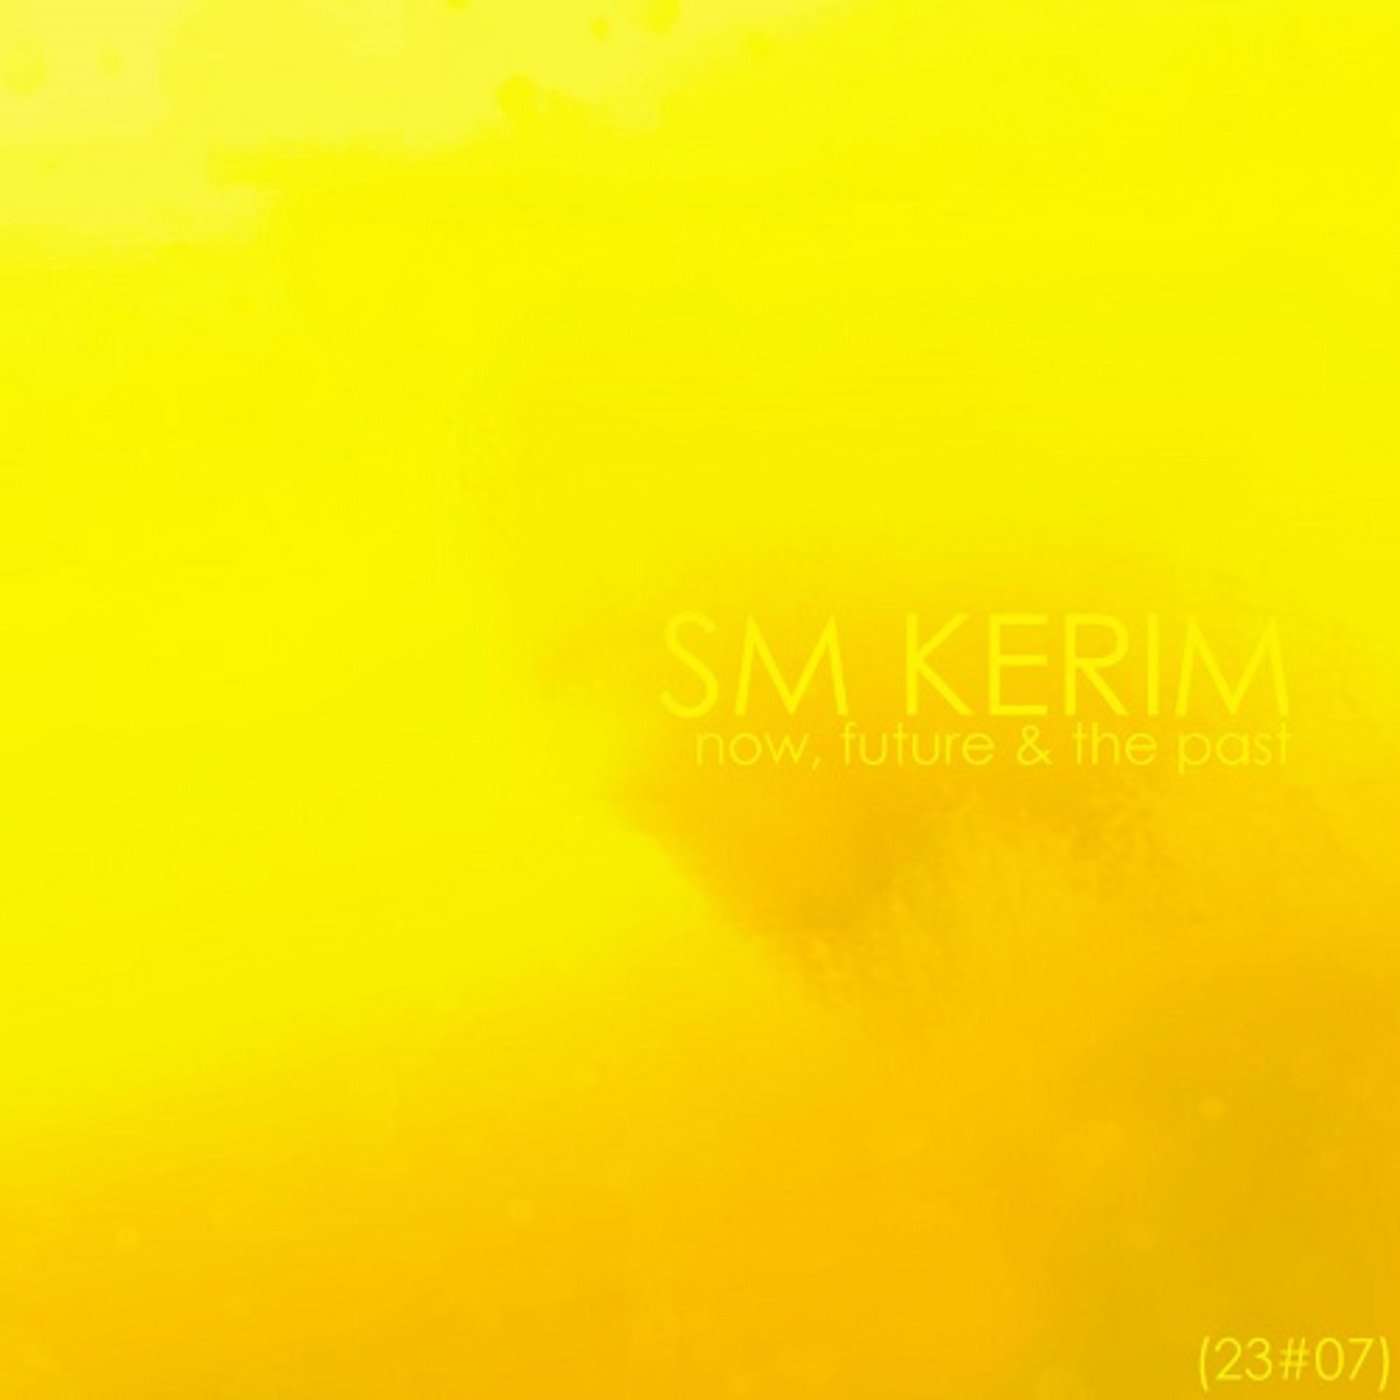 SM KERIM - Now, Future & The Past (23#07)